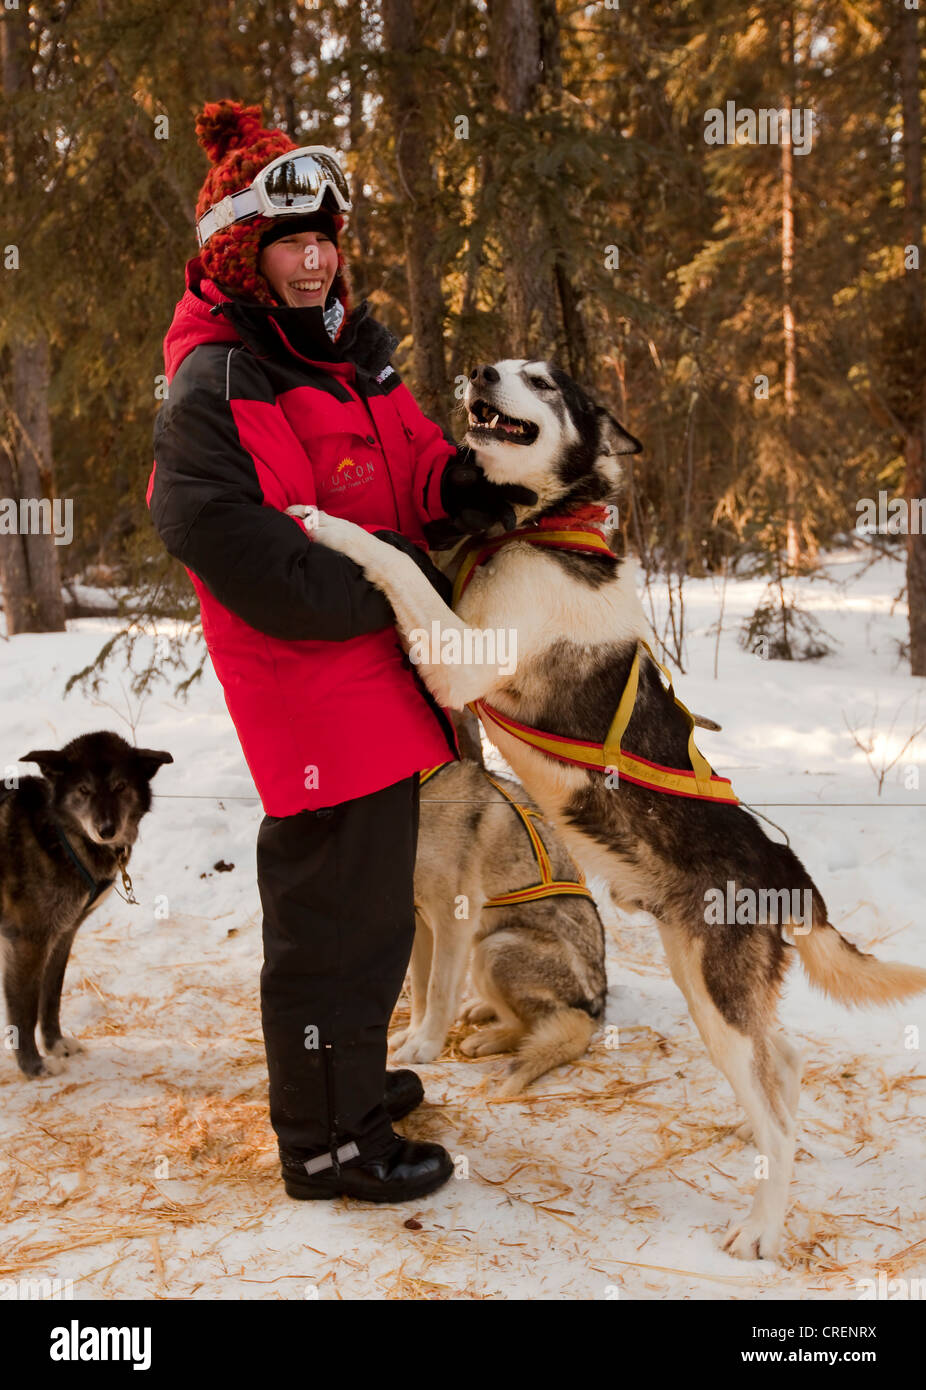 https://c8.alamy.com/comp/CRENRX/young-woman-dog-musher-cuddling-sled-dog-in-harness-alaskan-husky-CRENRX.jpg